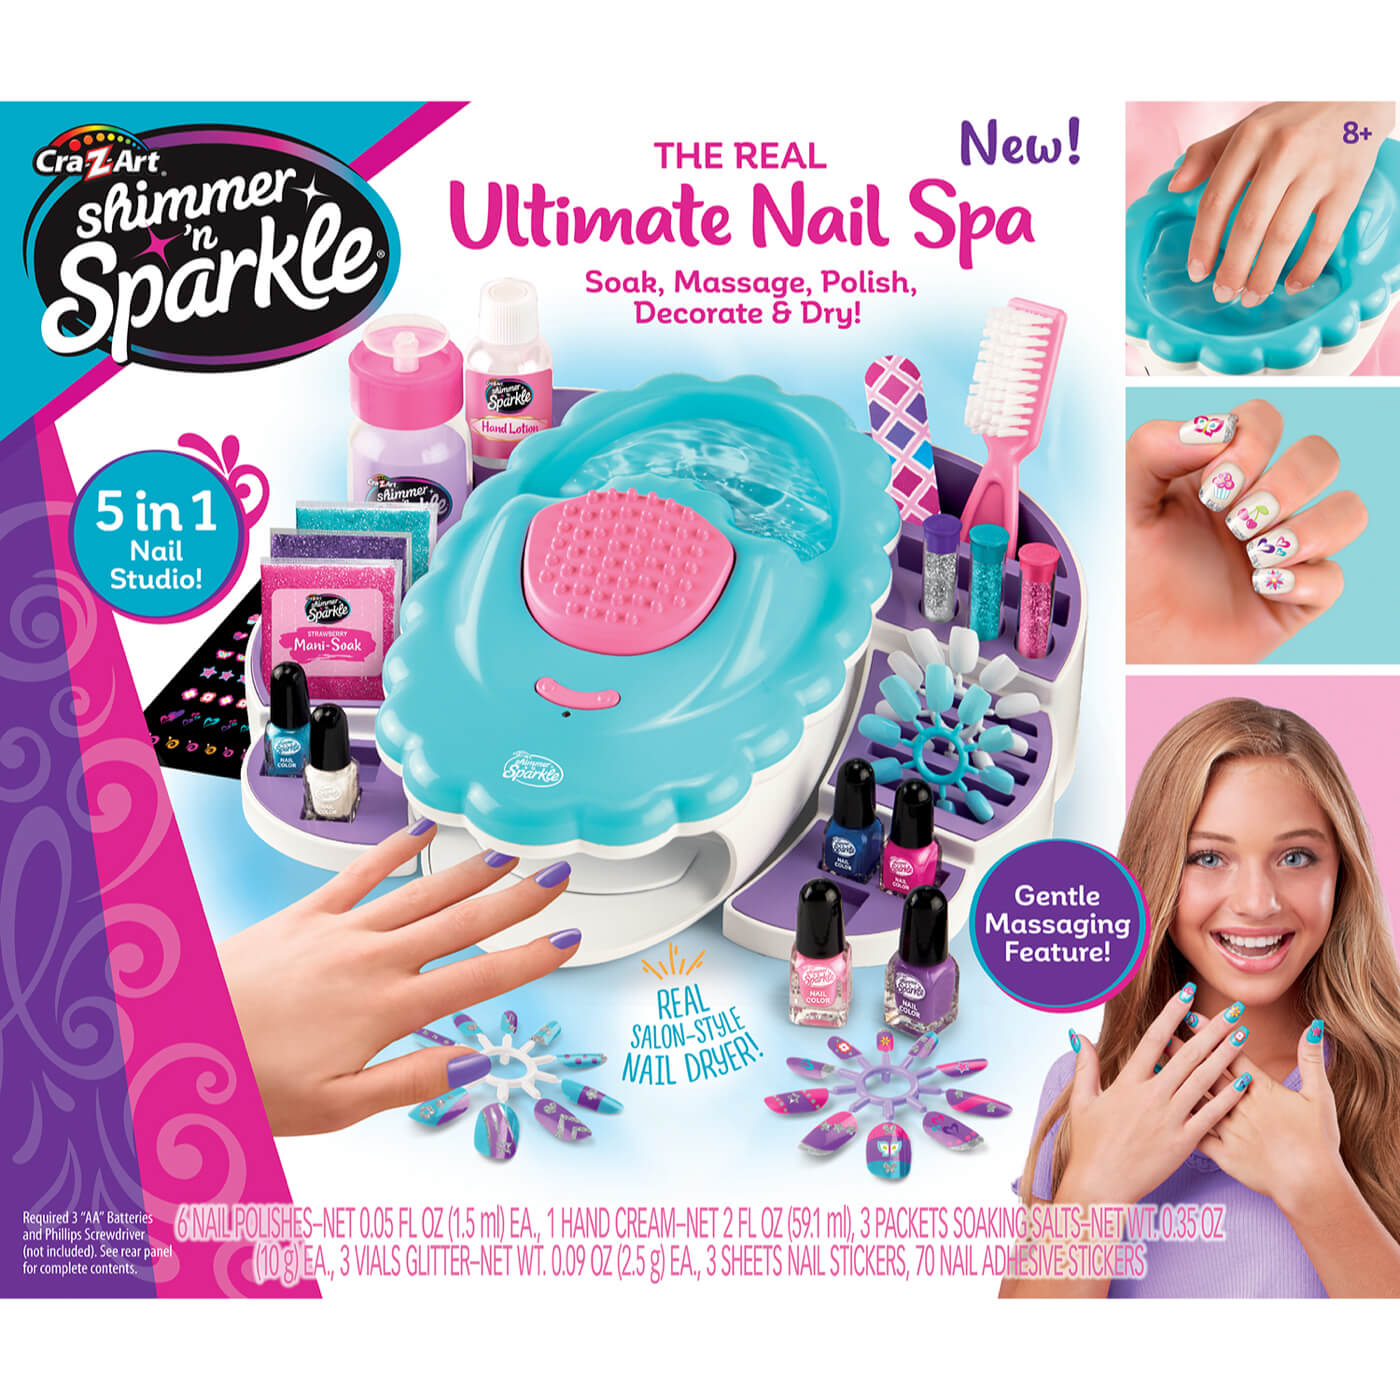 Buy Cra-Z-Art Shimmer 'n Sparkle Ultimate Nail Spa Kit Online in Dubai & the  UAE|Toys 'R' Us